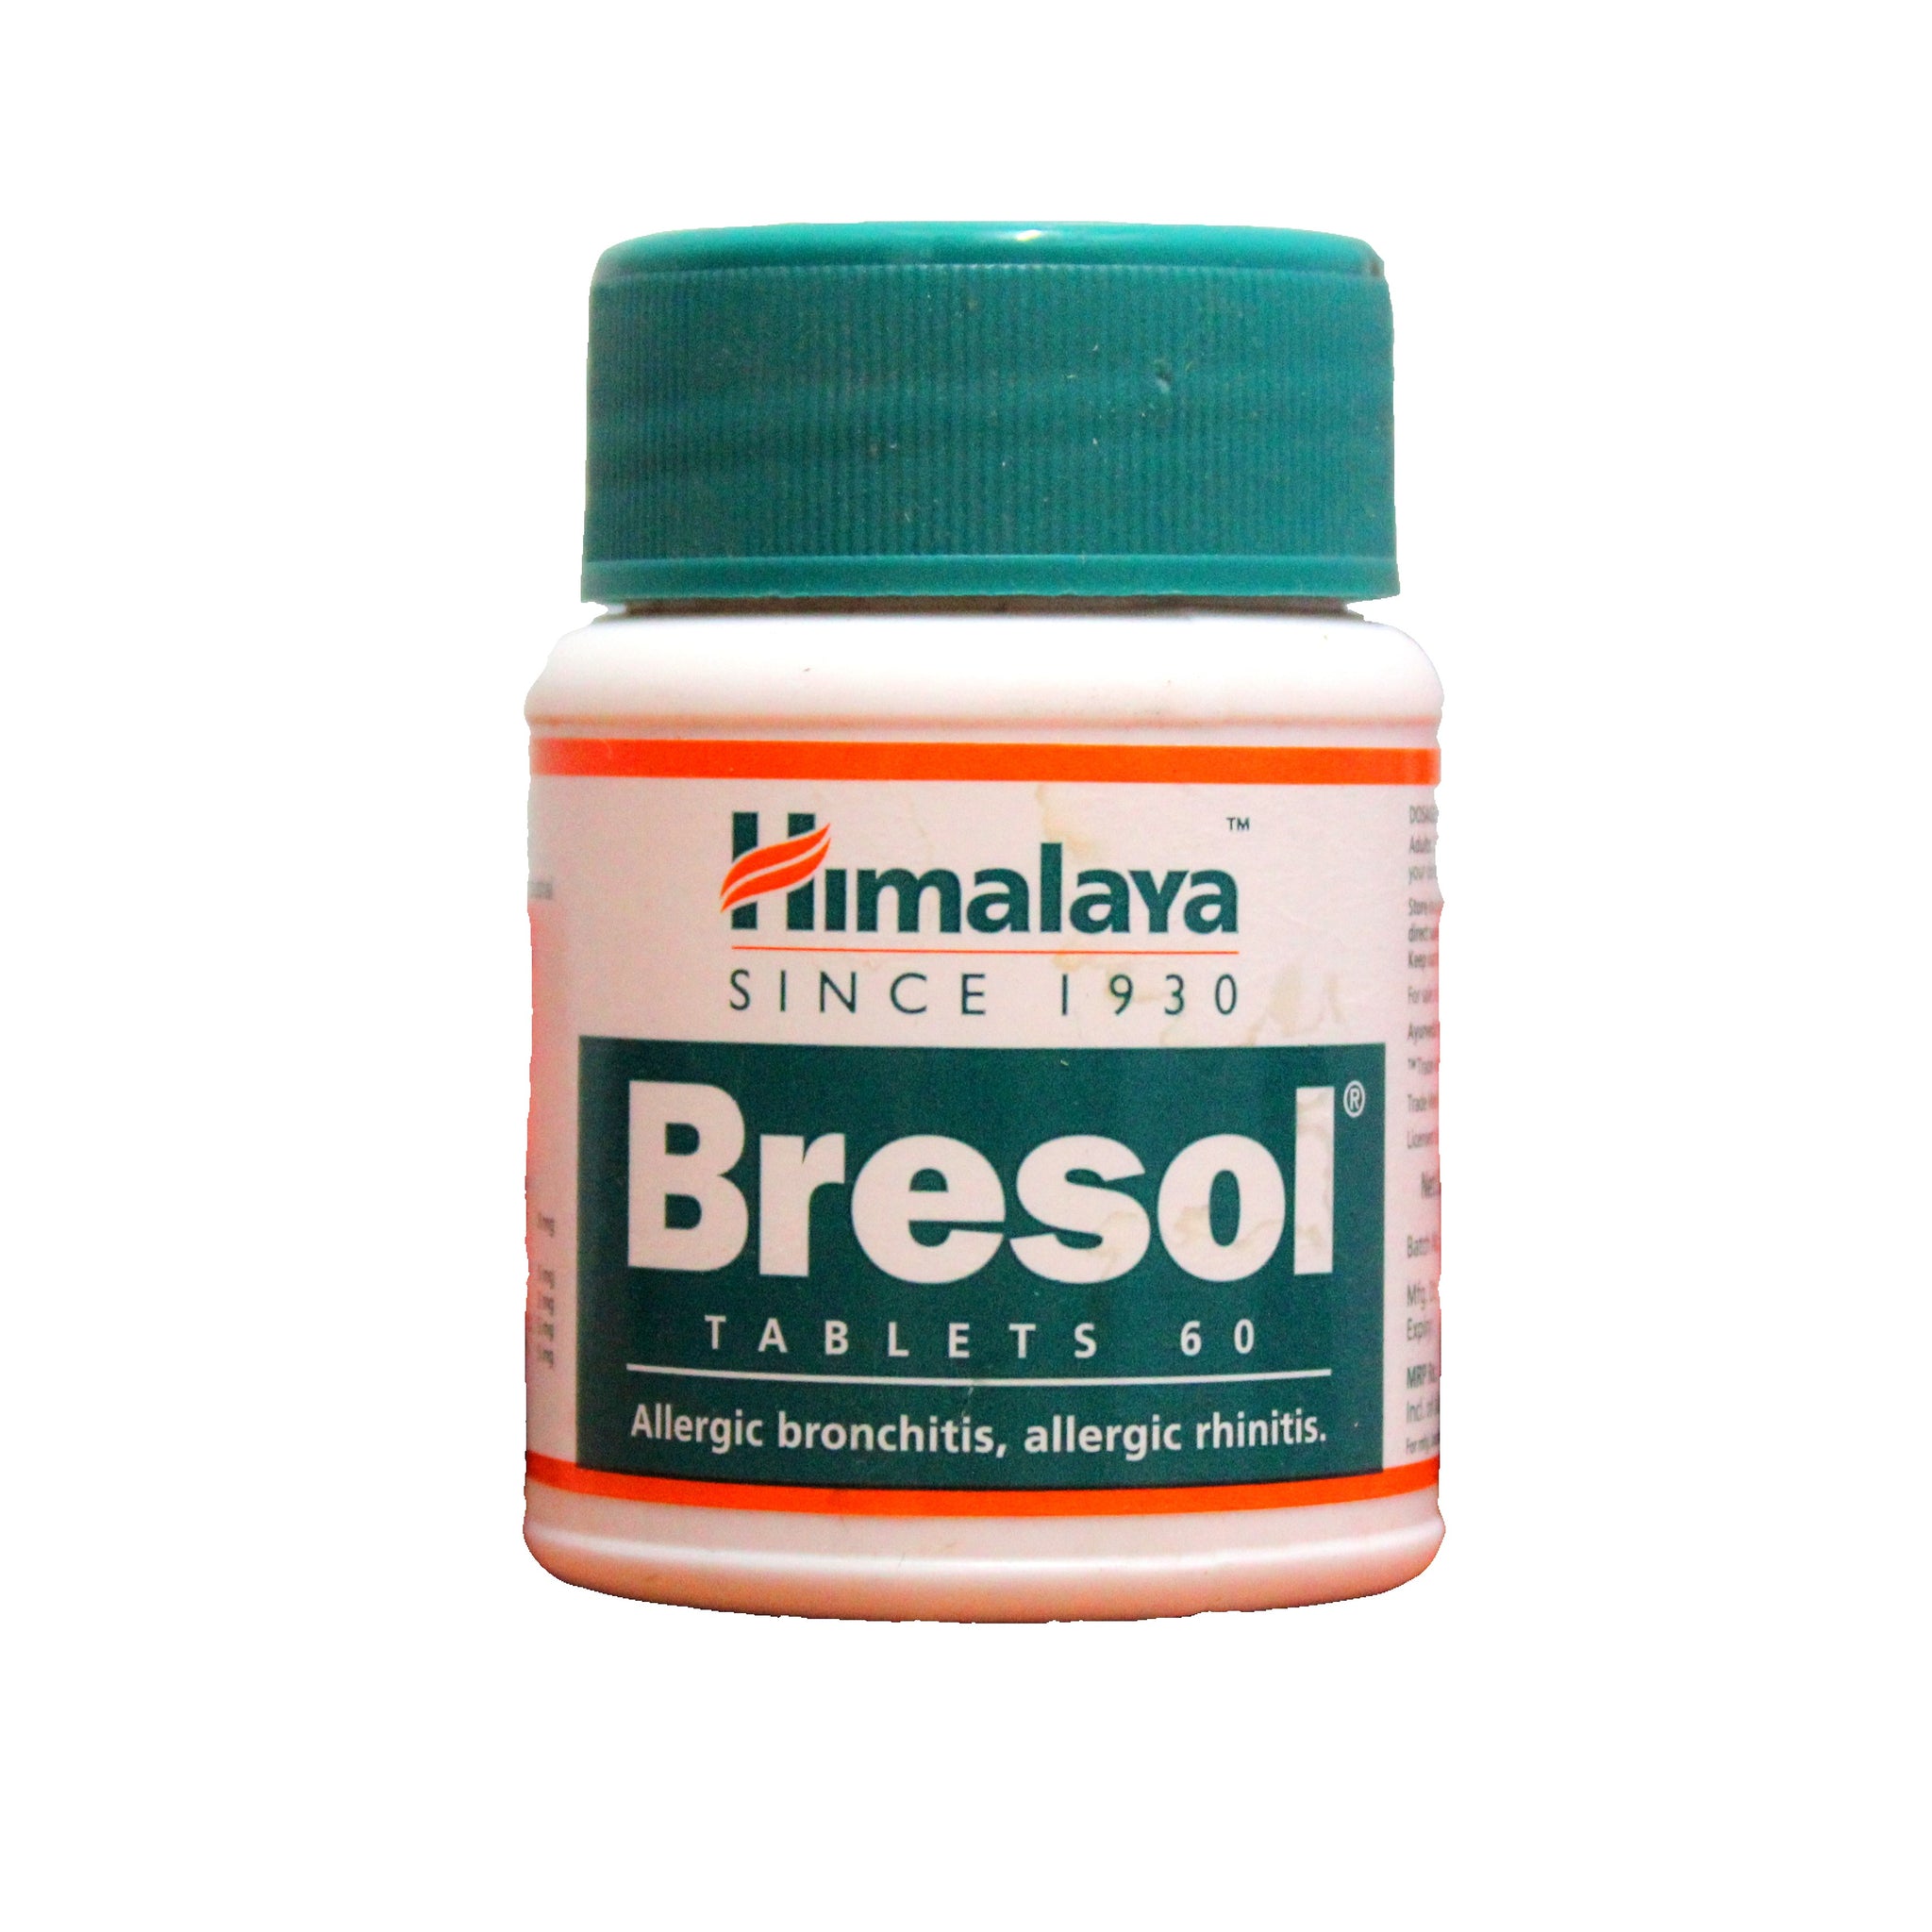 Bresol tablets - 60tablets Himalaya